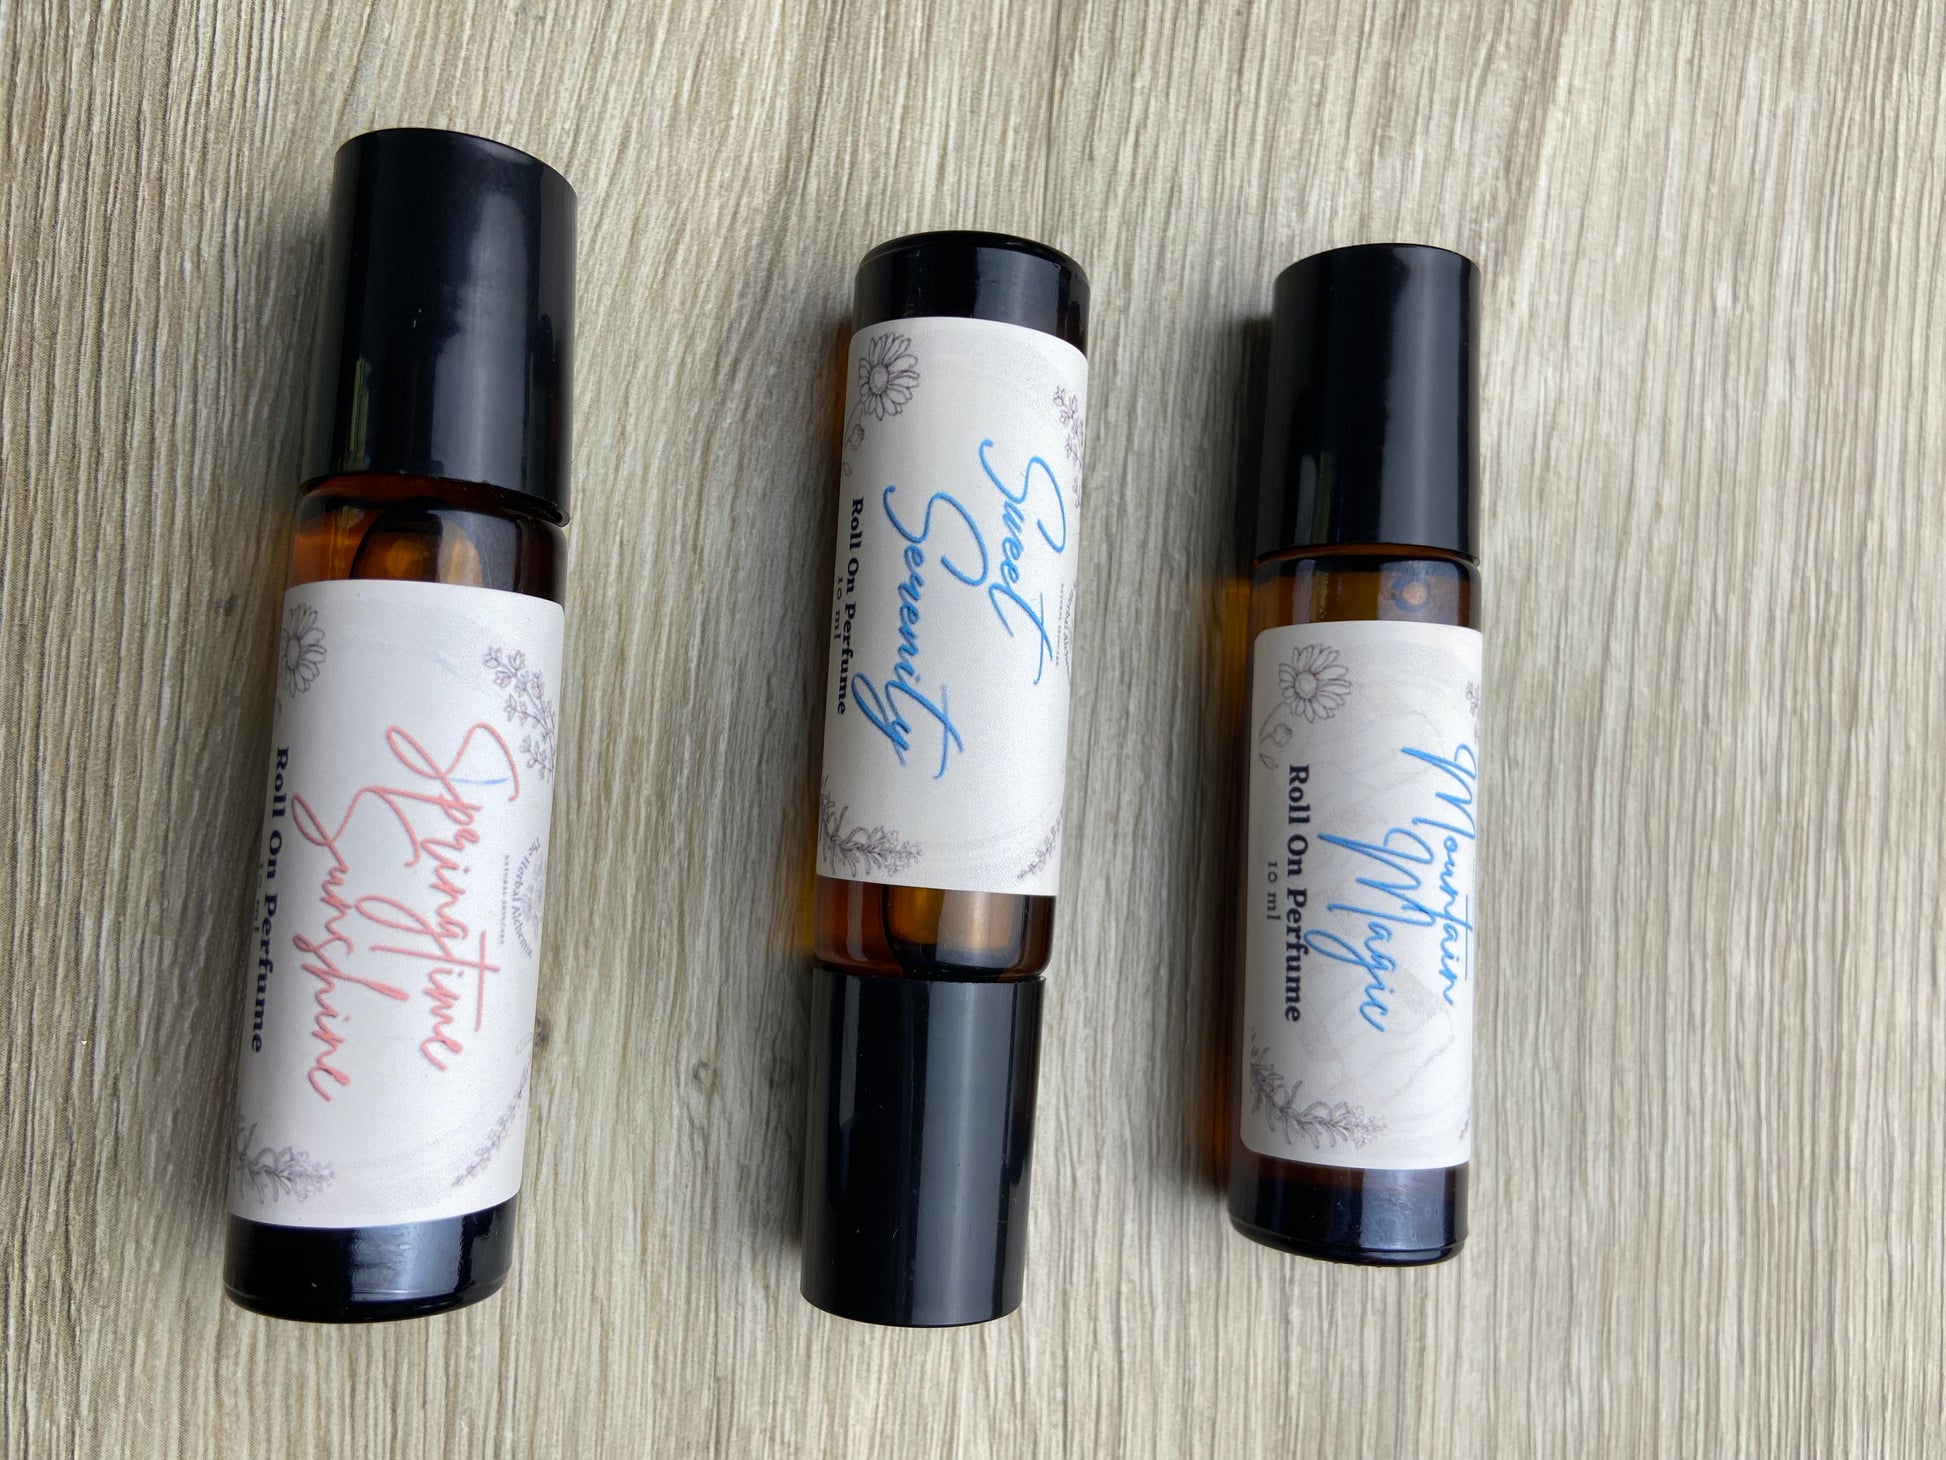 Roll-On Perfume - The Herbal Alchemist